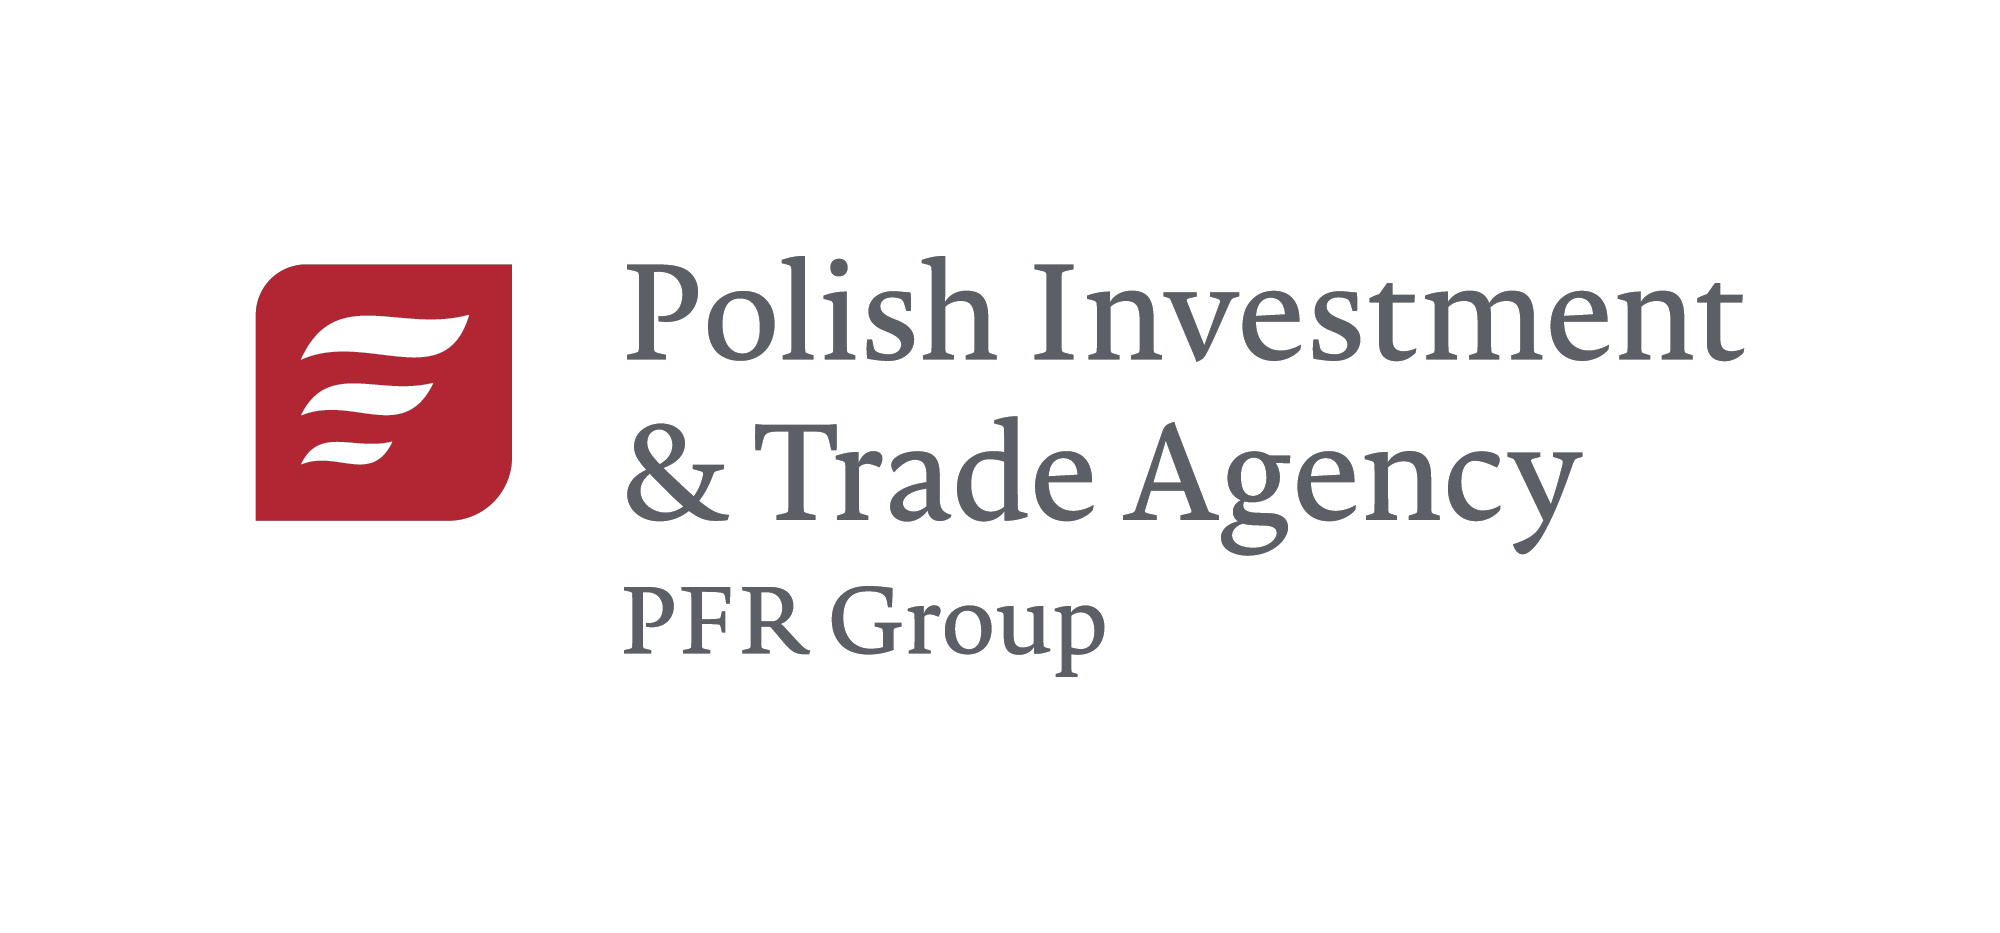 另開視窗，連結到波蘭投資及貿易局 Polish Investment and Trade Agency